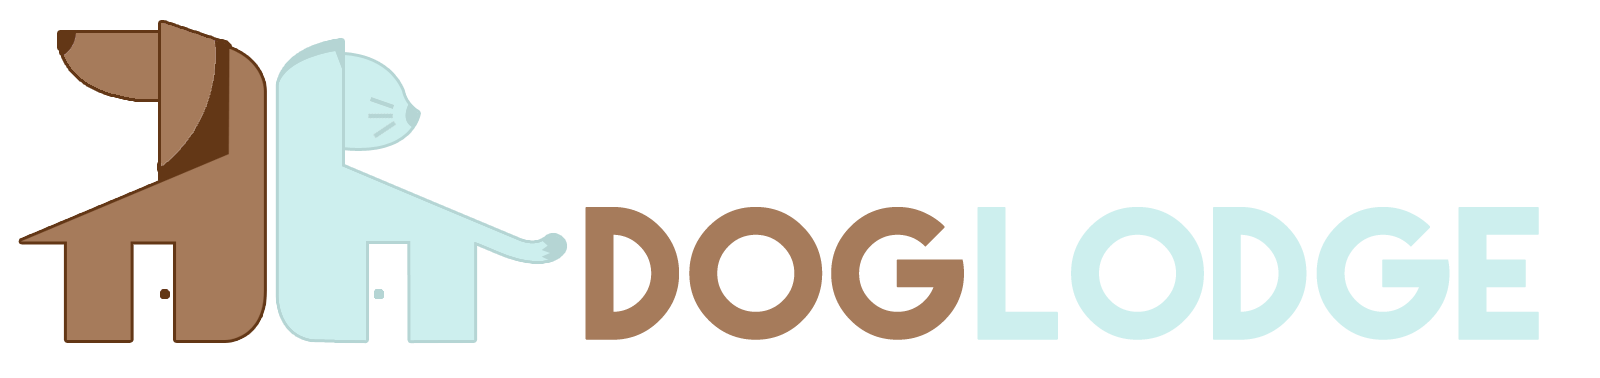 Dog Lodge logo